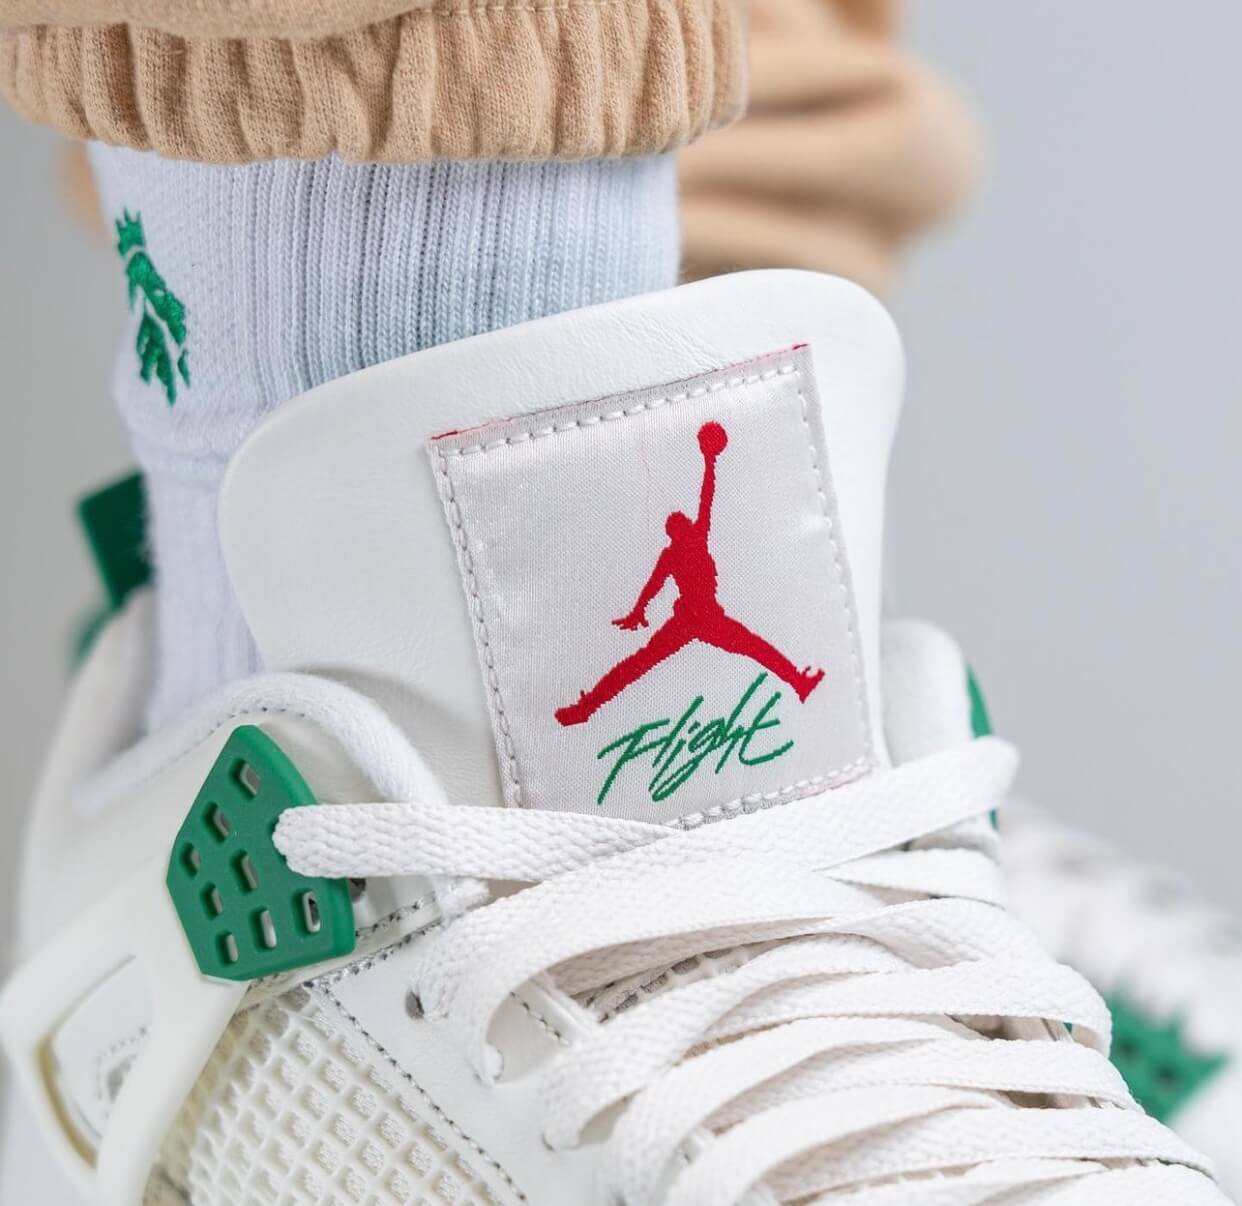 Nike SB Pick Ups - Supreme Dunk Low SB Rammellzee And SB Air Jordan 4 Pine  Green - On Feet, Sizing 